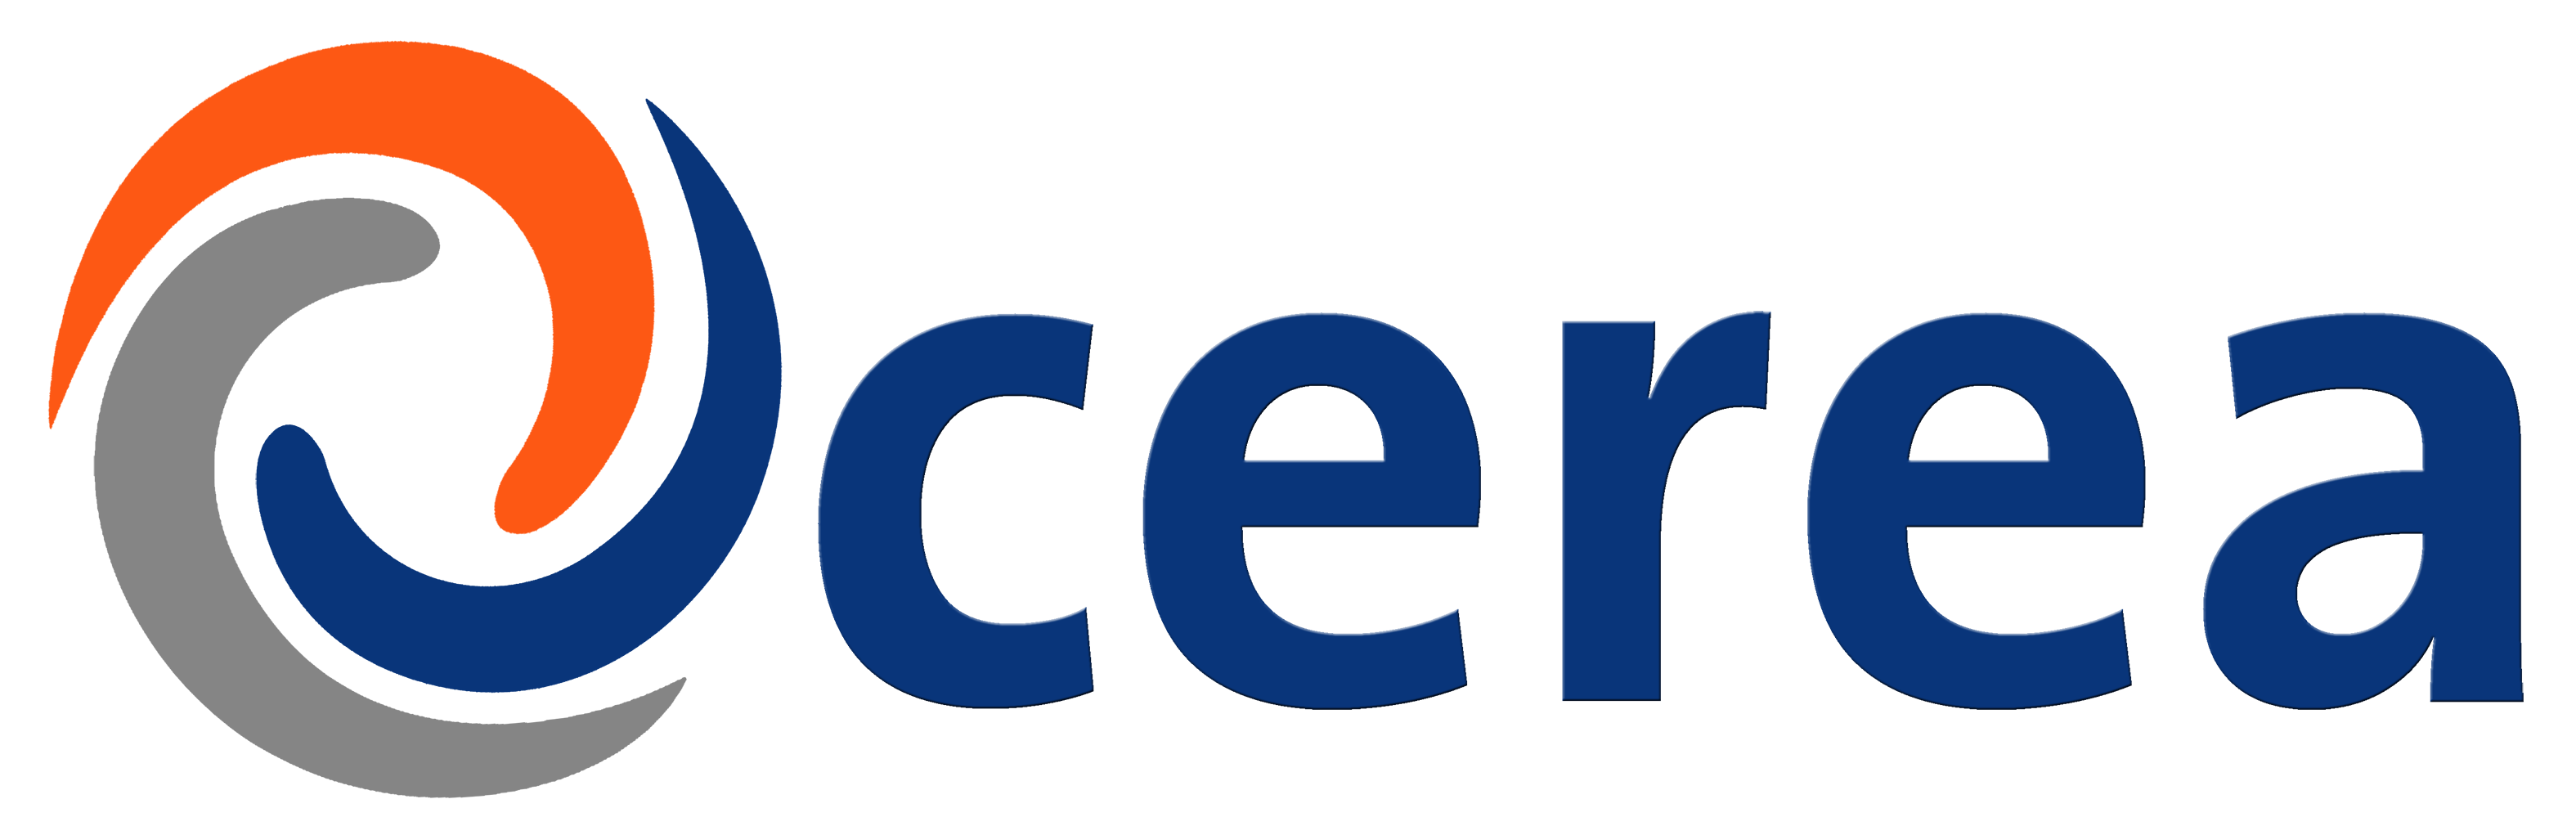 Cerea logo